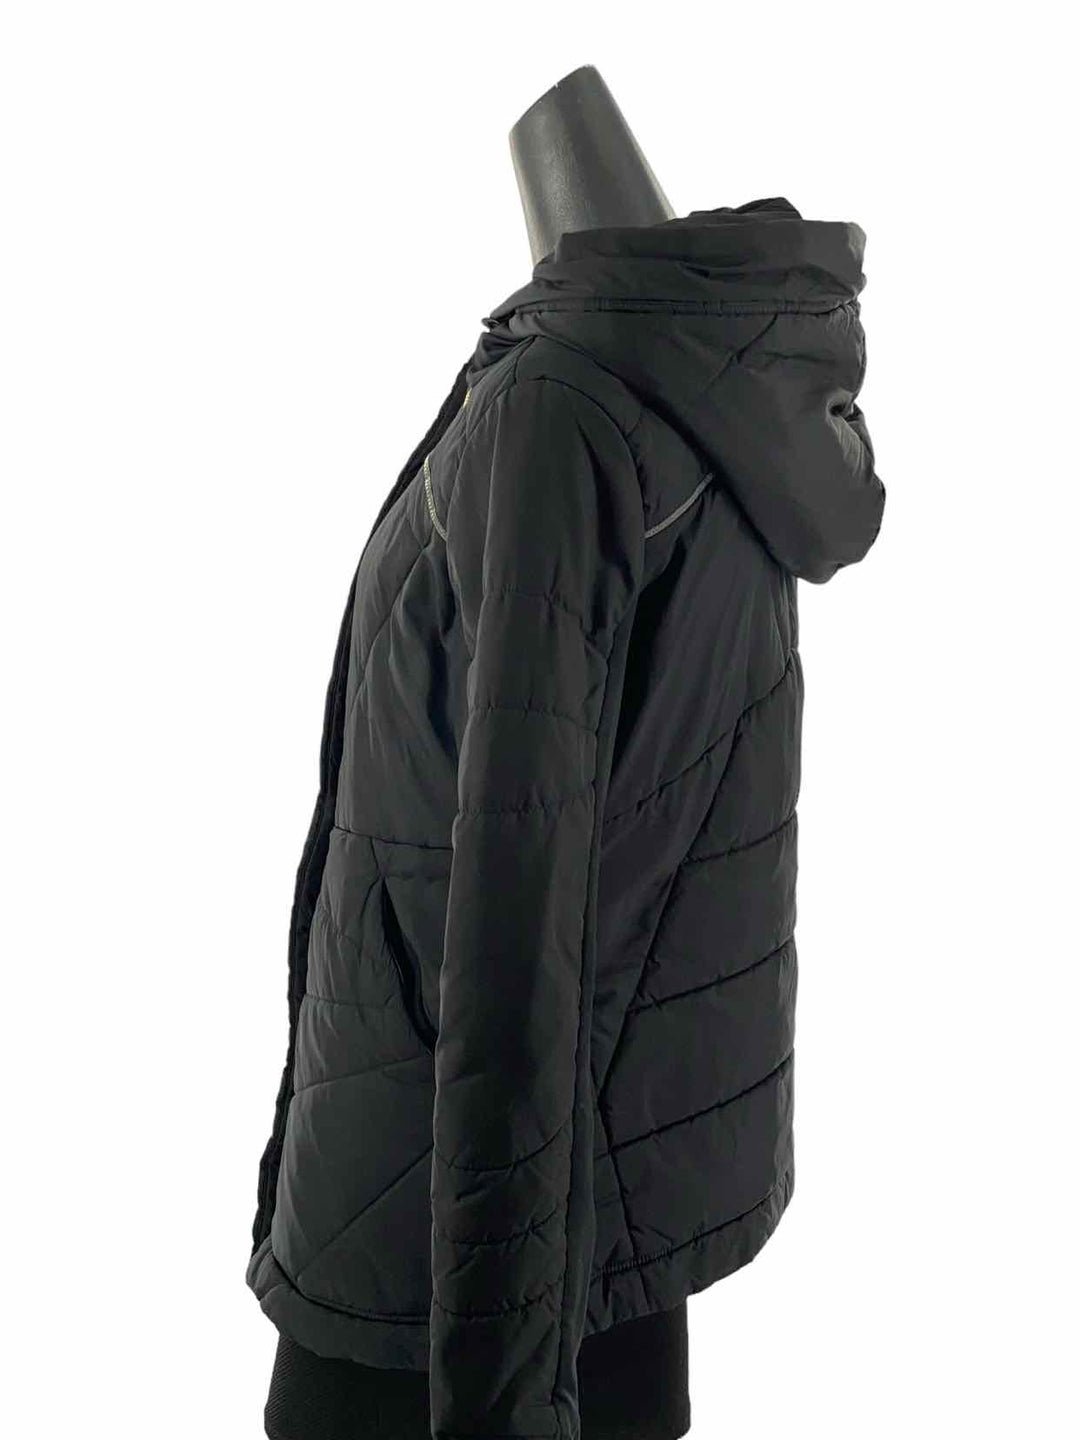 Zella Size M Black Jacket (Outdoor)